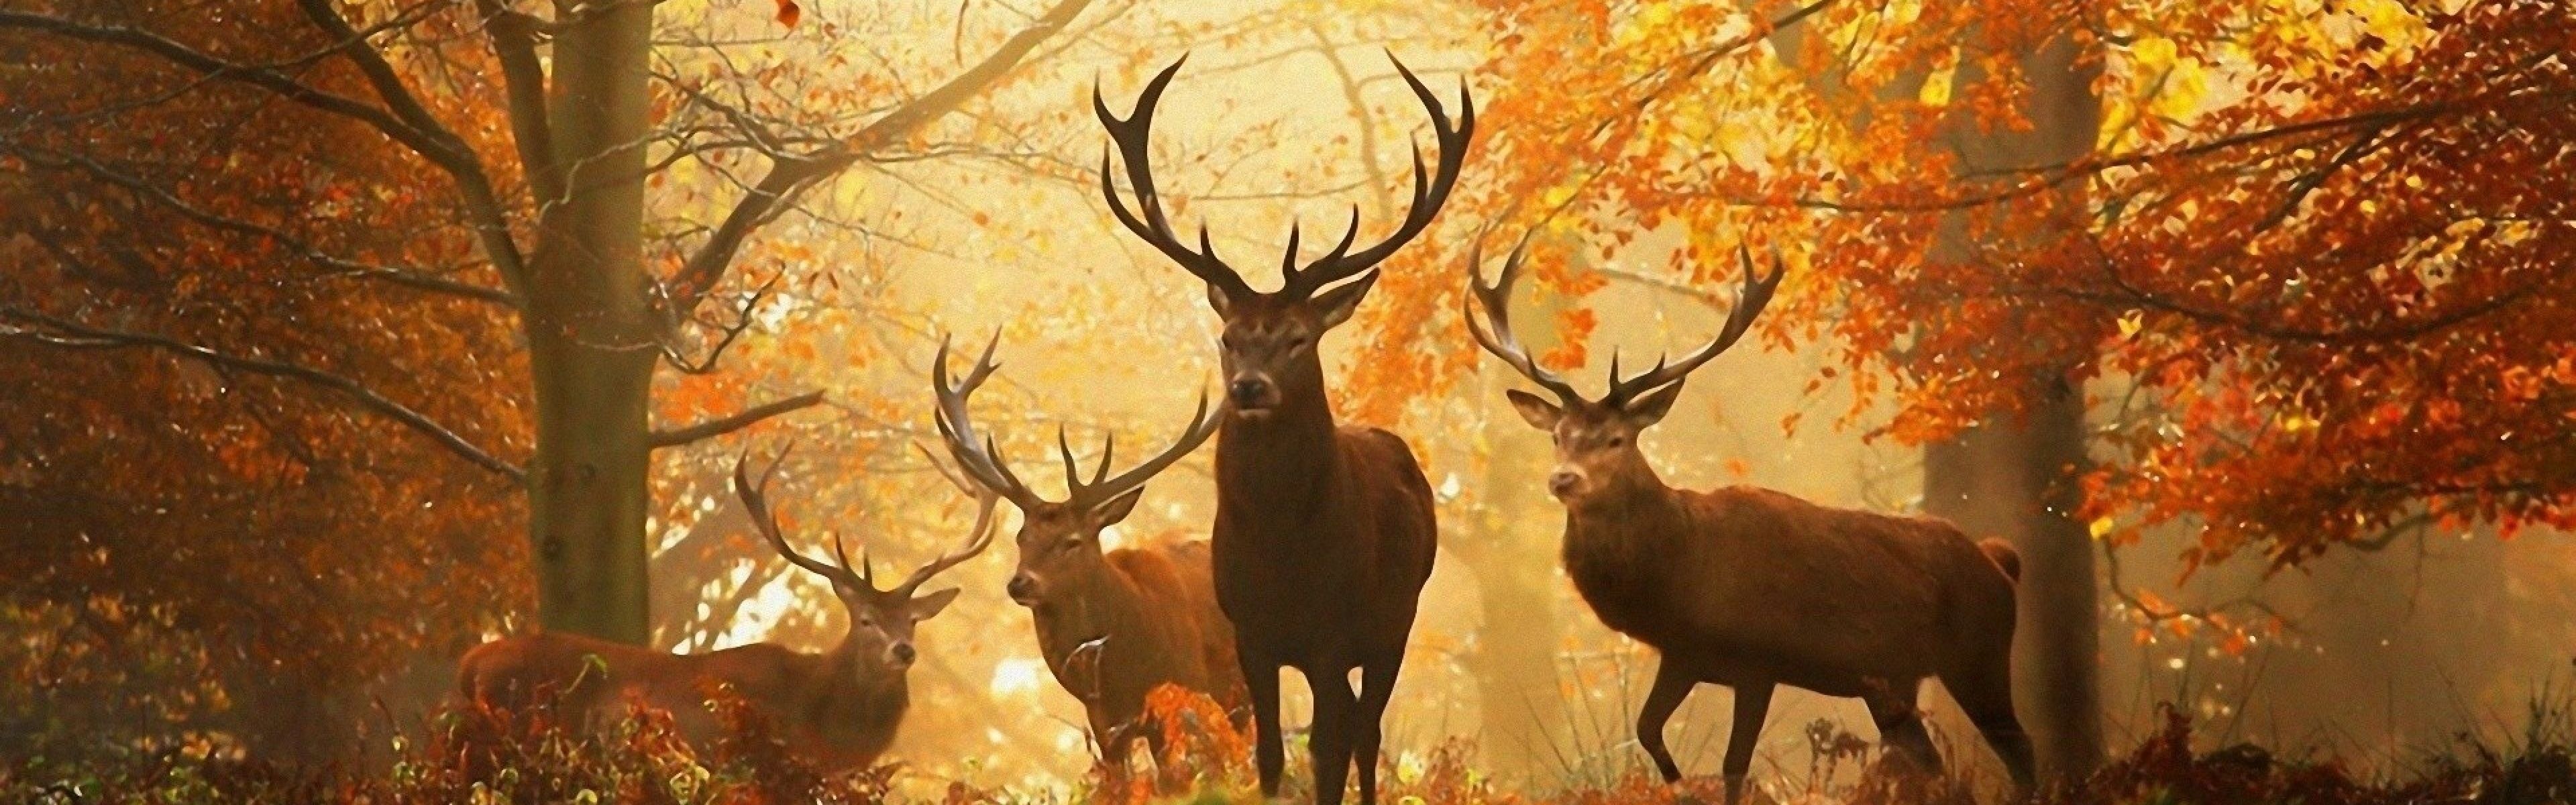 Download Wallpaper 3840x1200 Deer, Grass, Leaves, Autumn, Trees ...